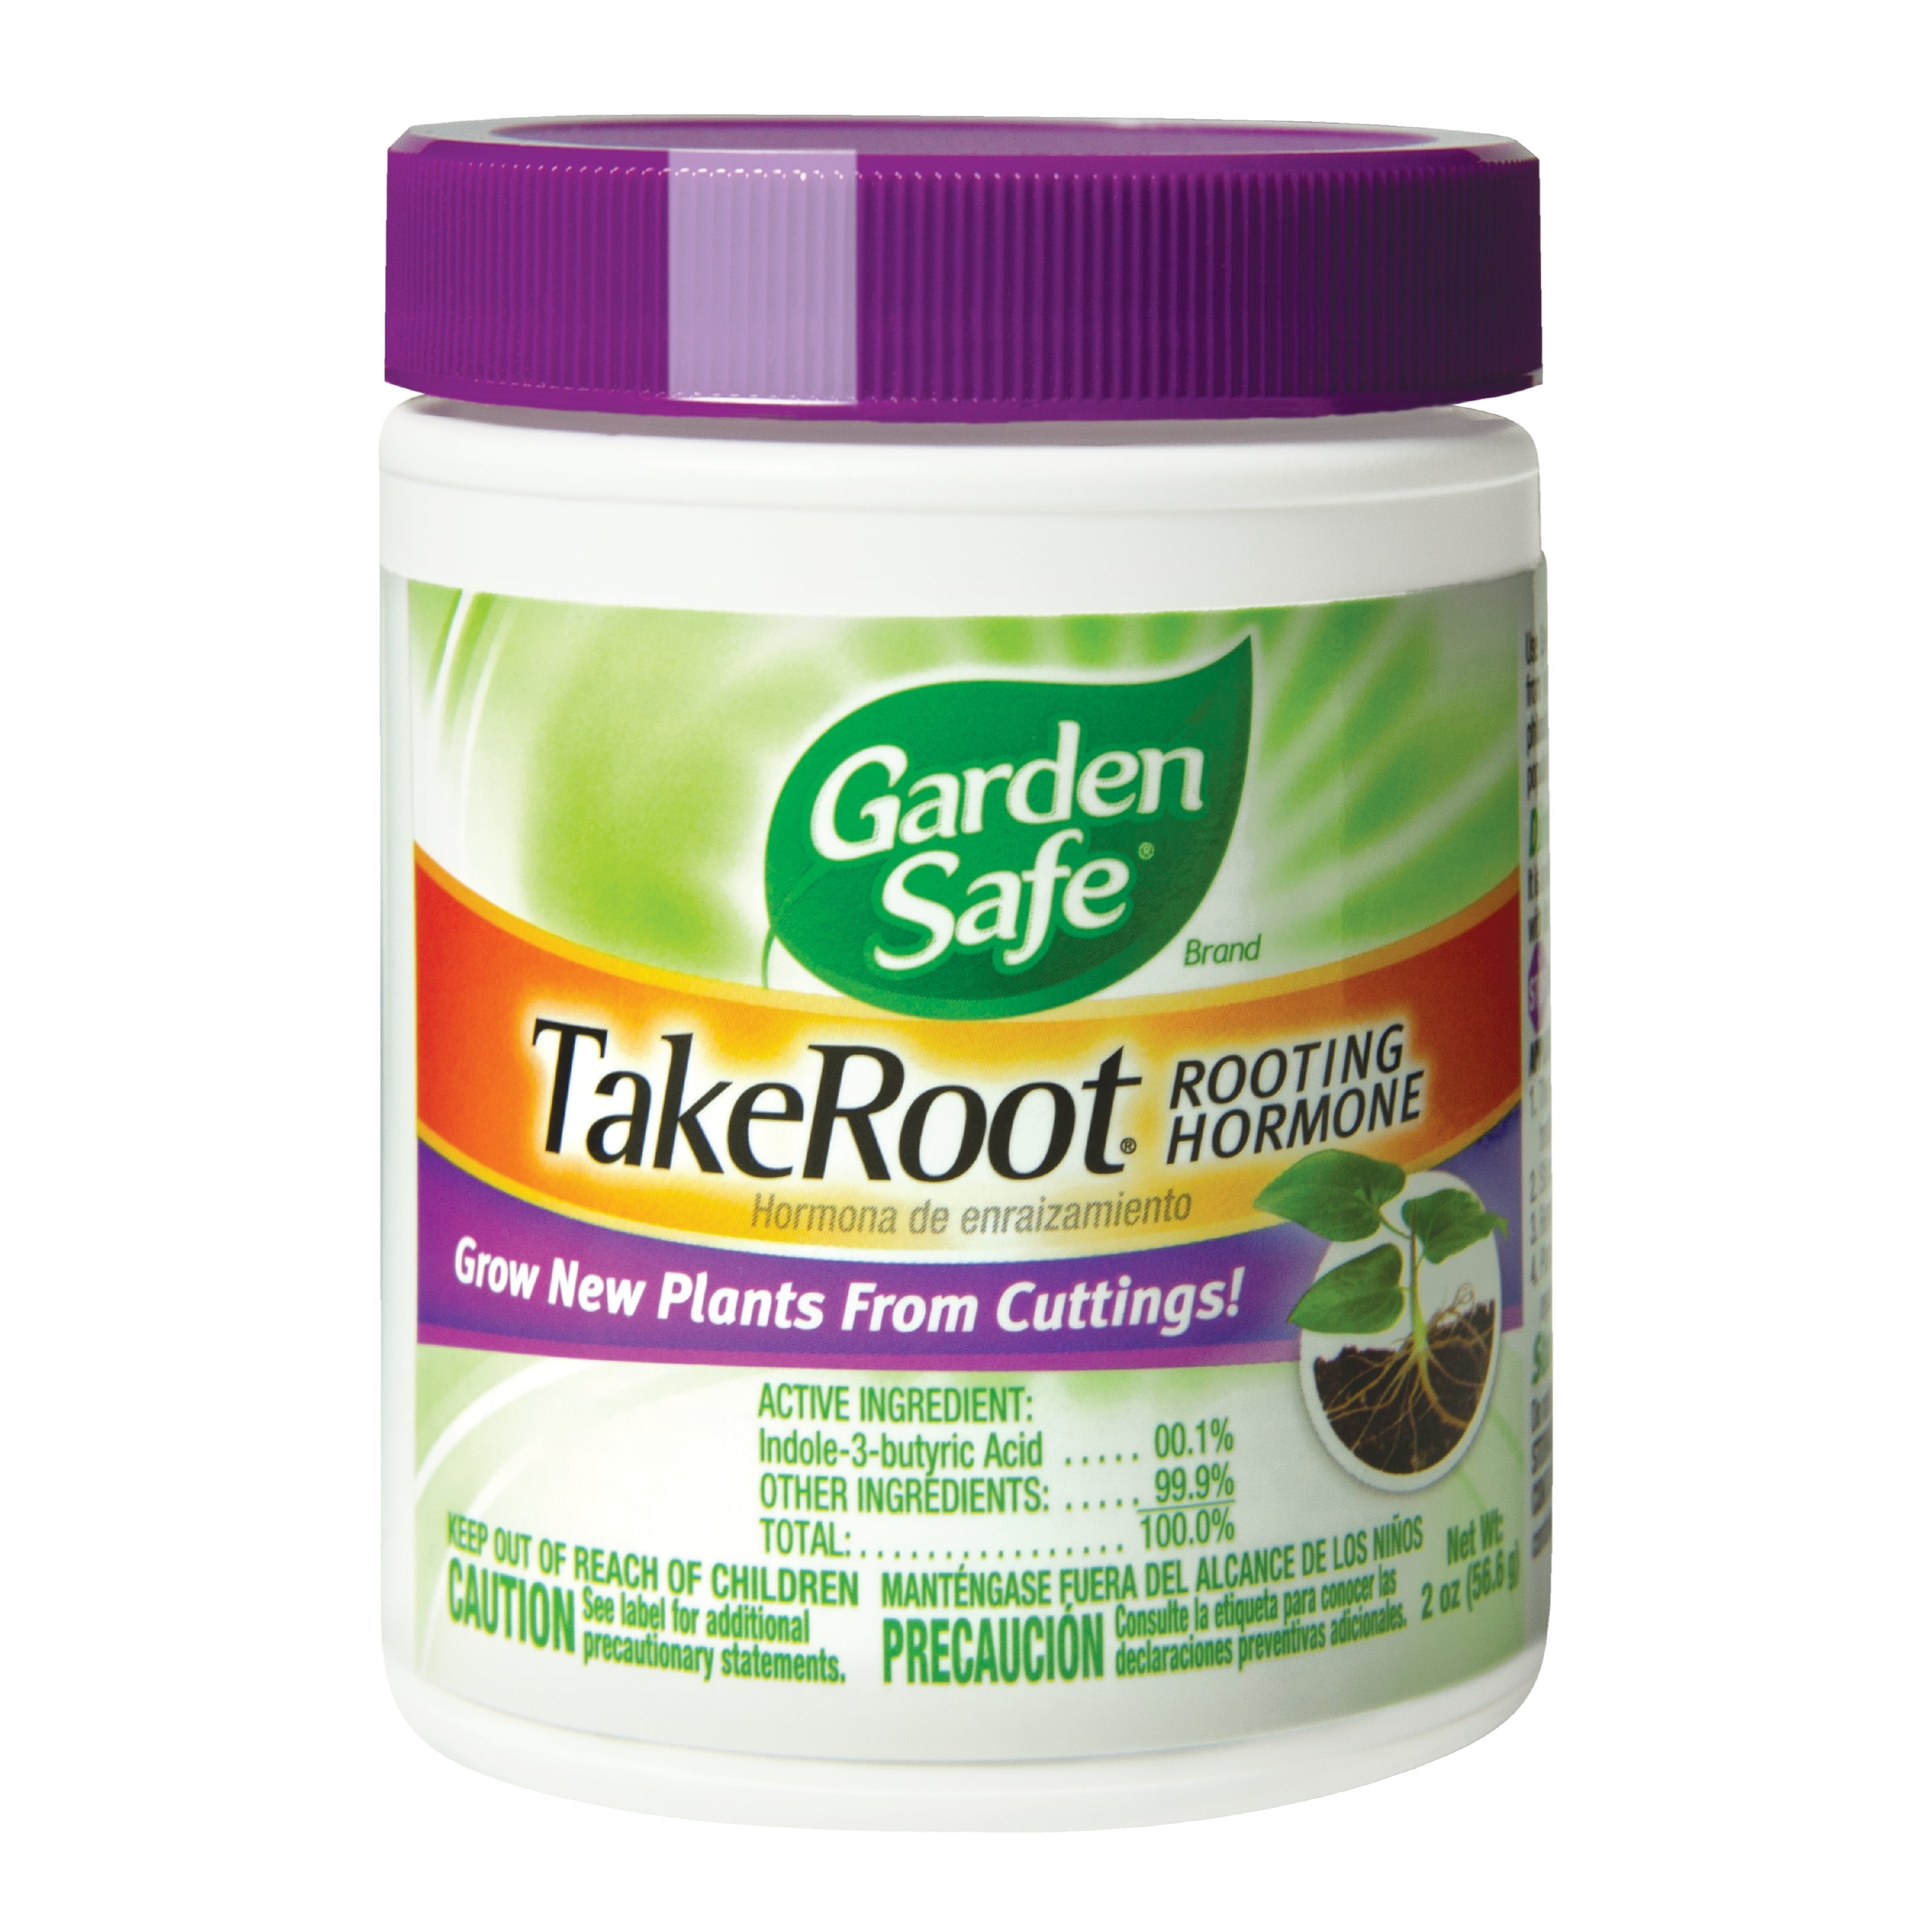 Garden safe takeroot rooting hormone for plants